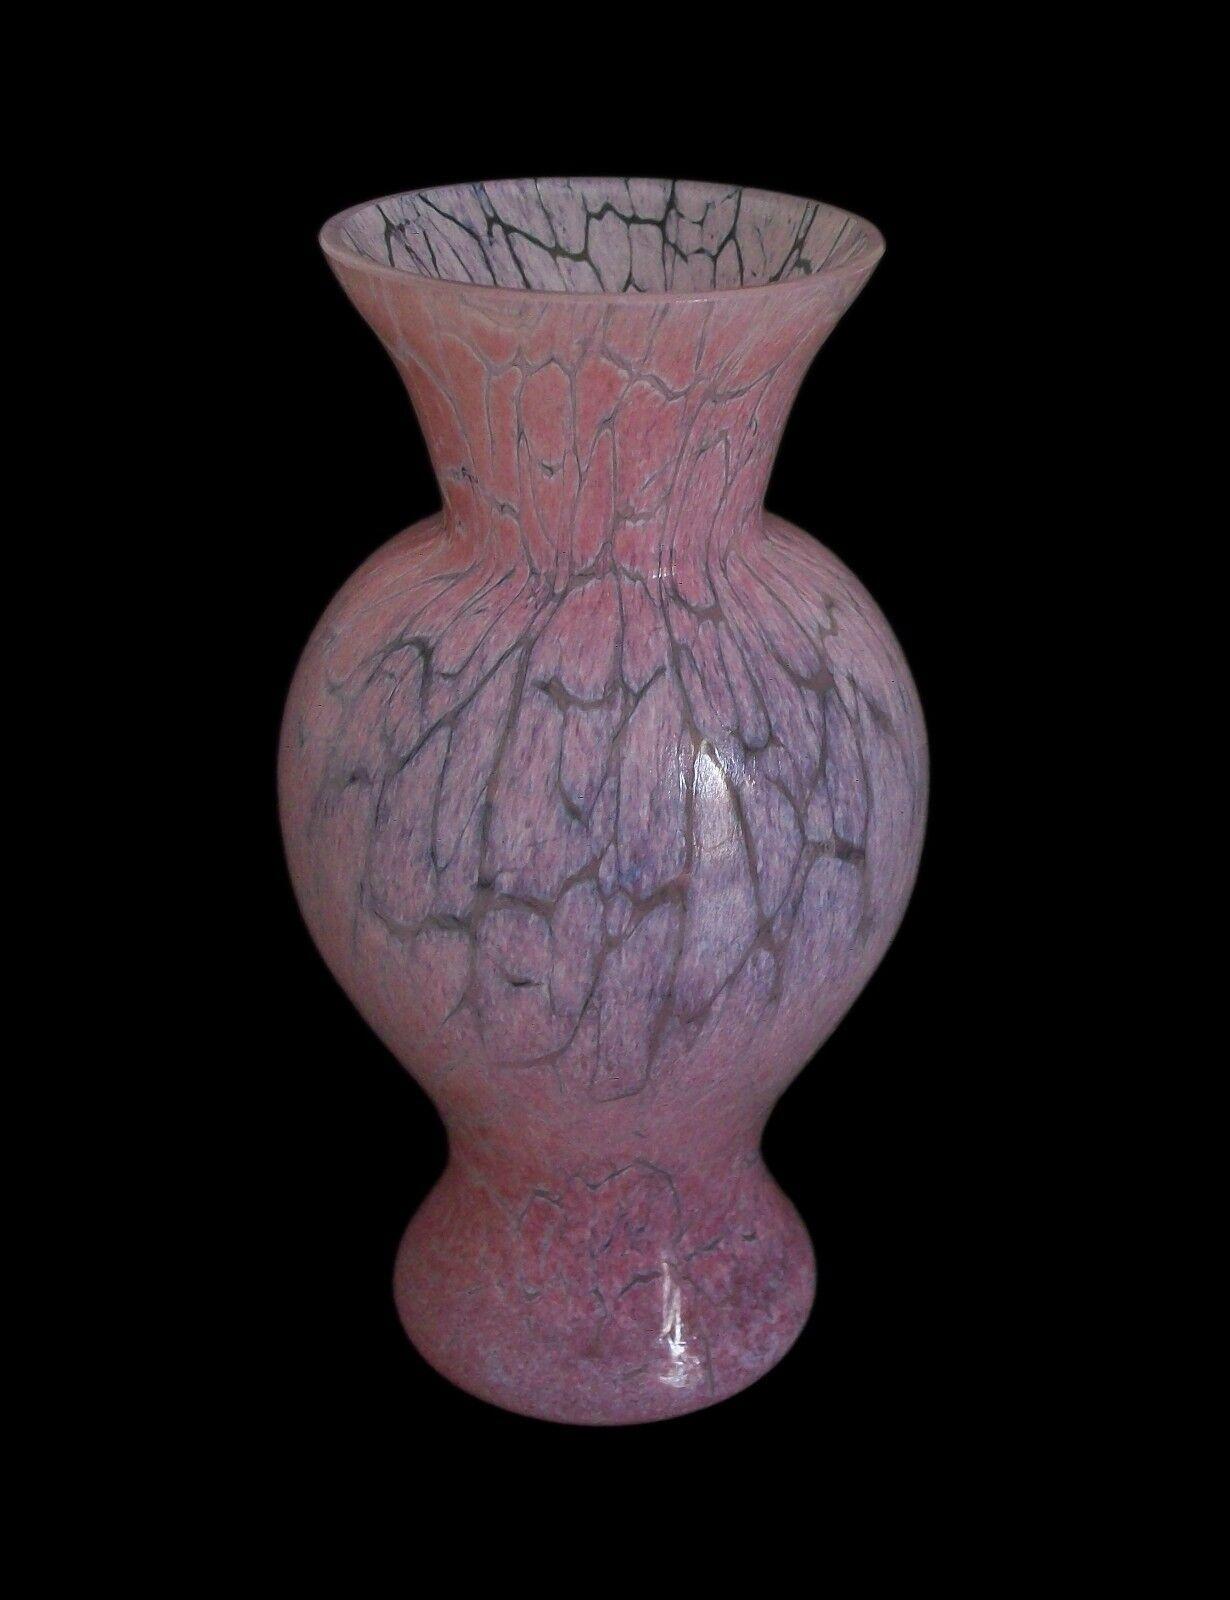 KOSTA BODA  Ulrica Hydman-Vallien (Designer - b.1938) - Mid Century Modern pink crackle glass vase - hand blown - signed - Sweden - circa 1970's.

Excellent/mint vintage condition - no loss - no damage - no restoration - minimal signs of age and